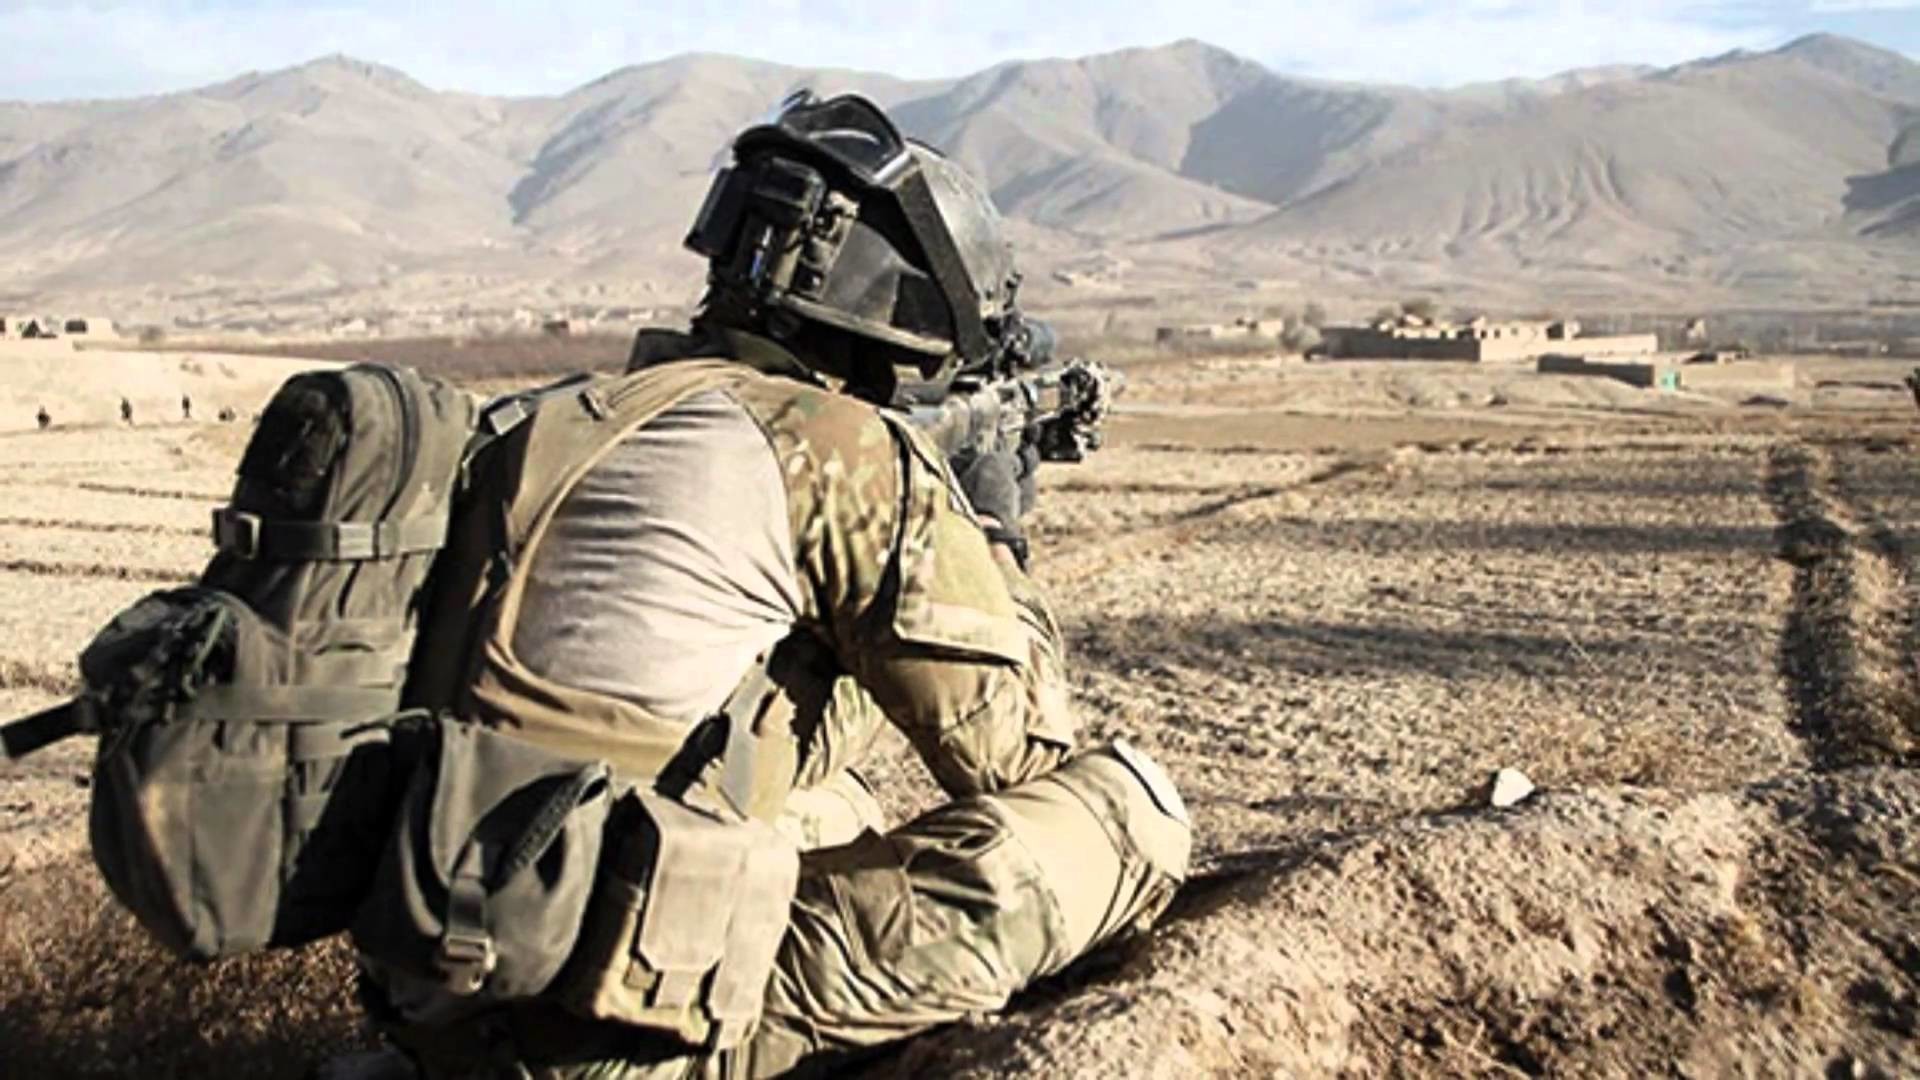 1920x1080 75th Ranger Regiment-Operation Enduring Freedom, Afghanistan. - YouTube